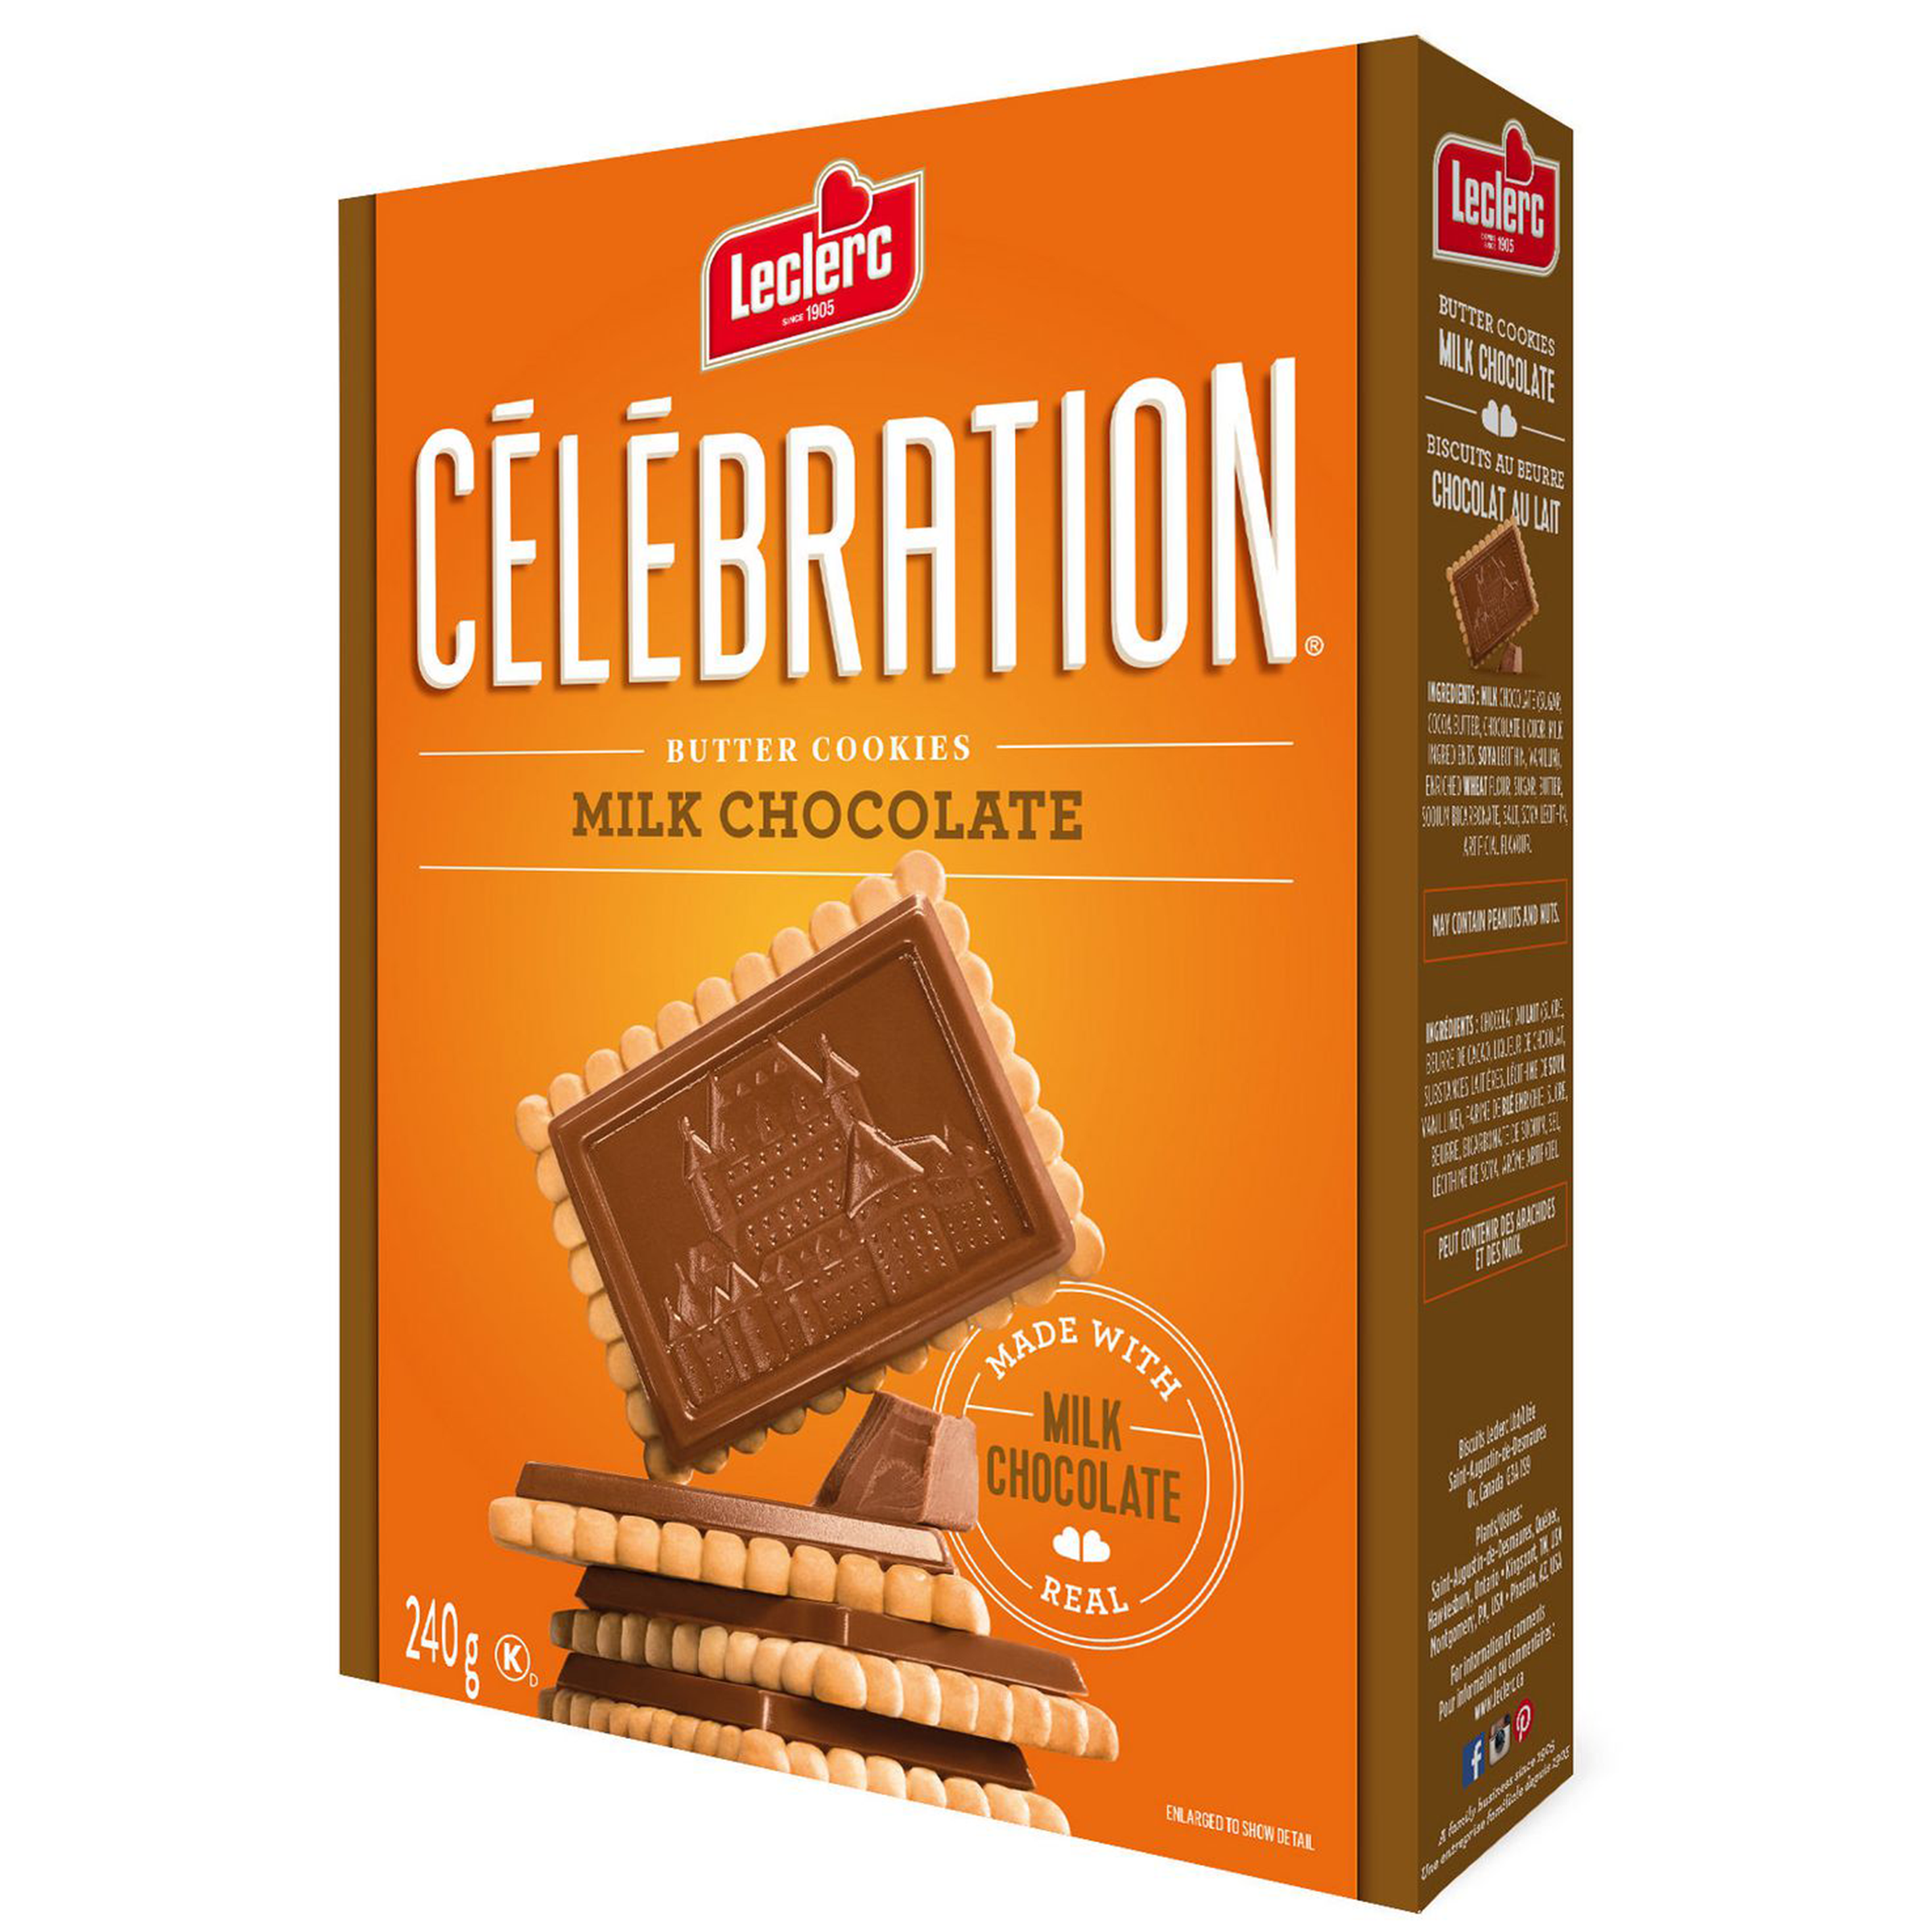 Celebration Cookies - Milk Chocolate